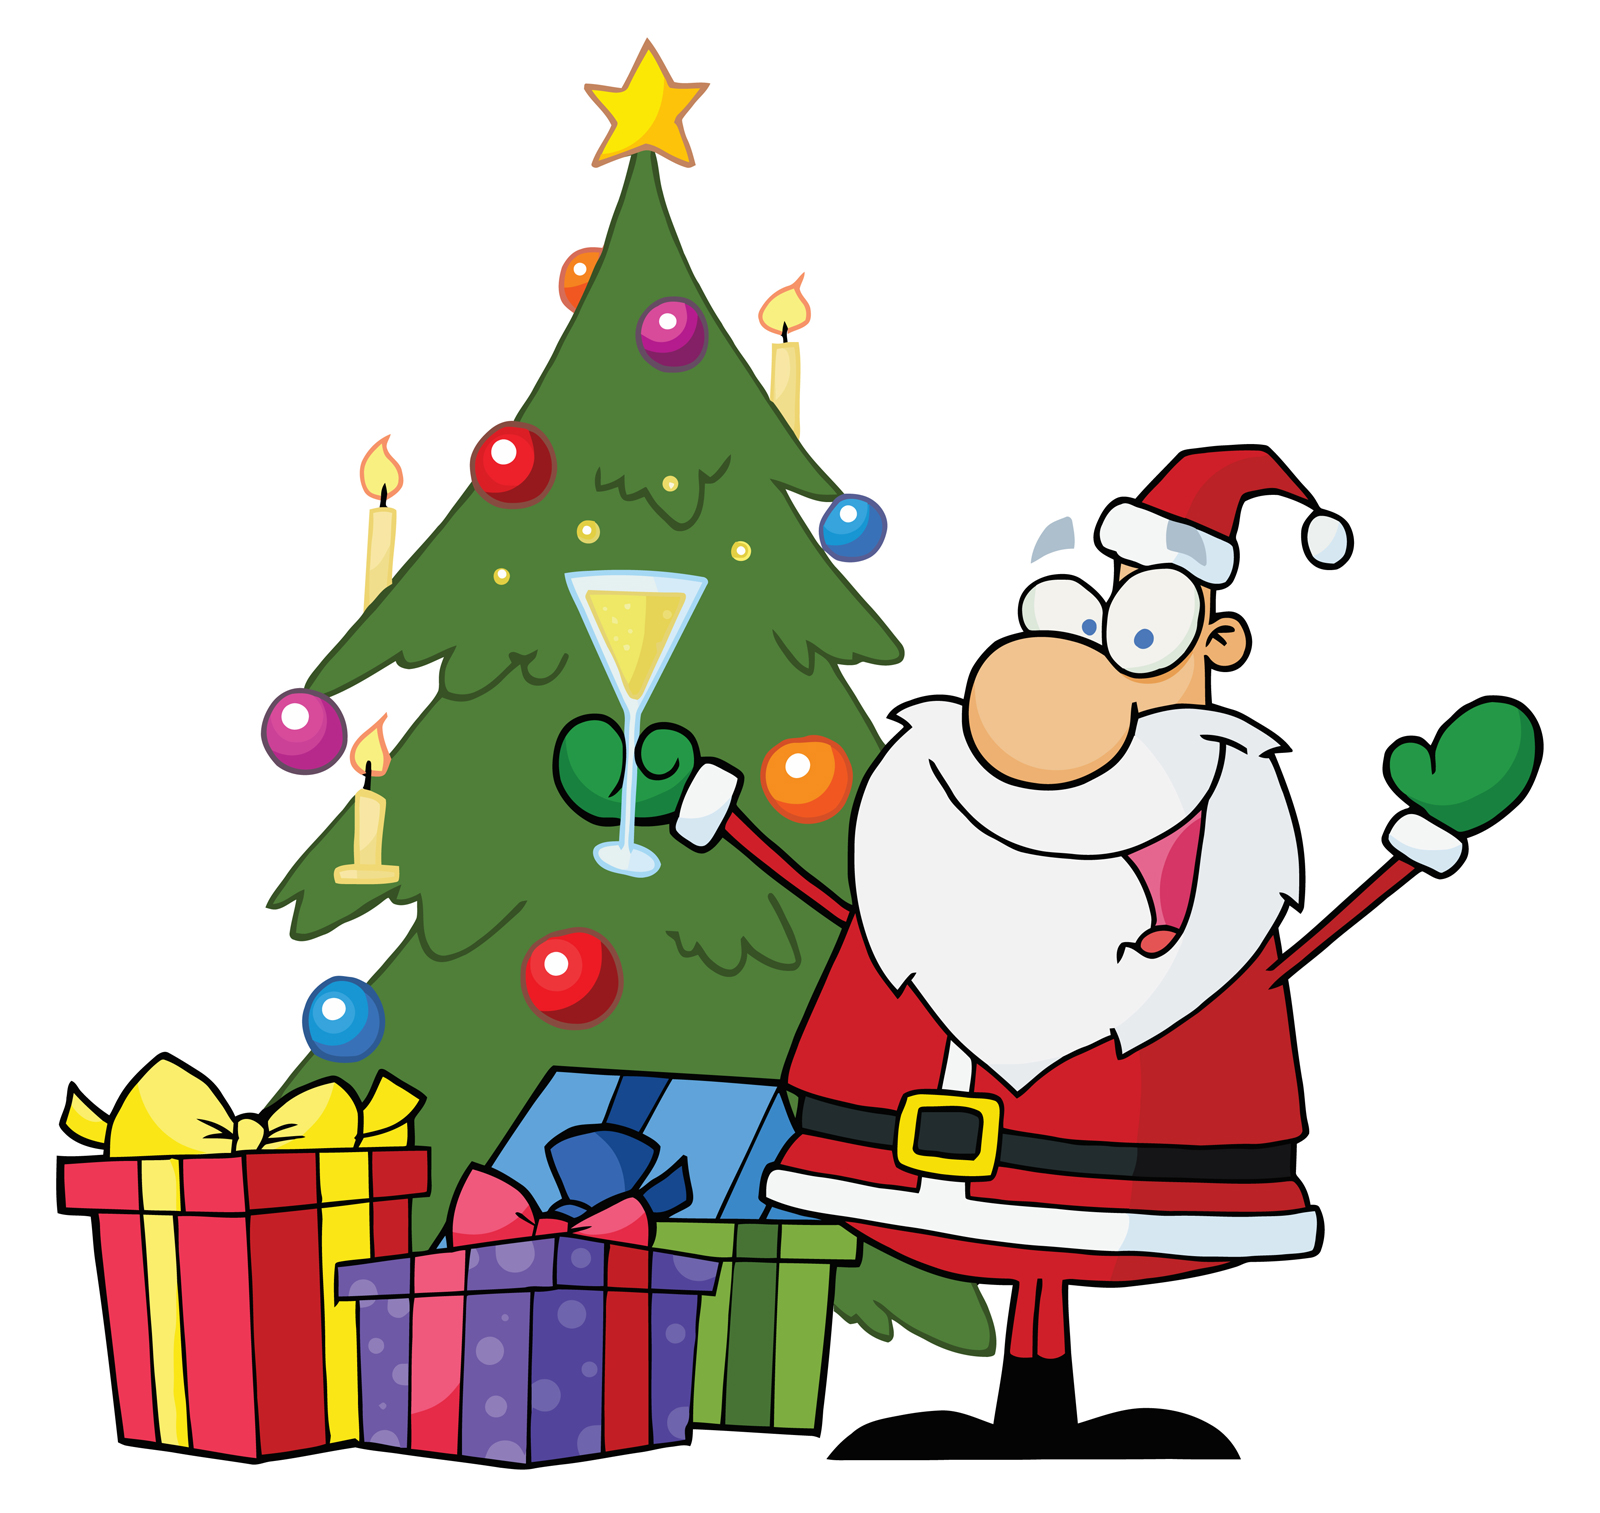 Cartoon Christmas Tree with Gifts and Santa